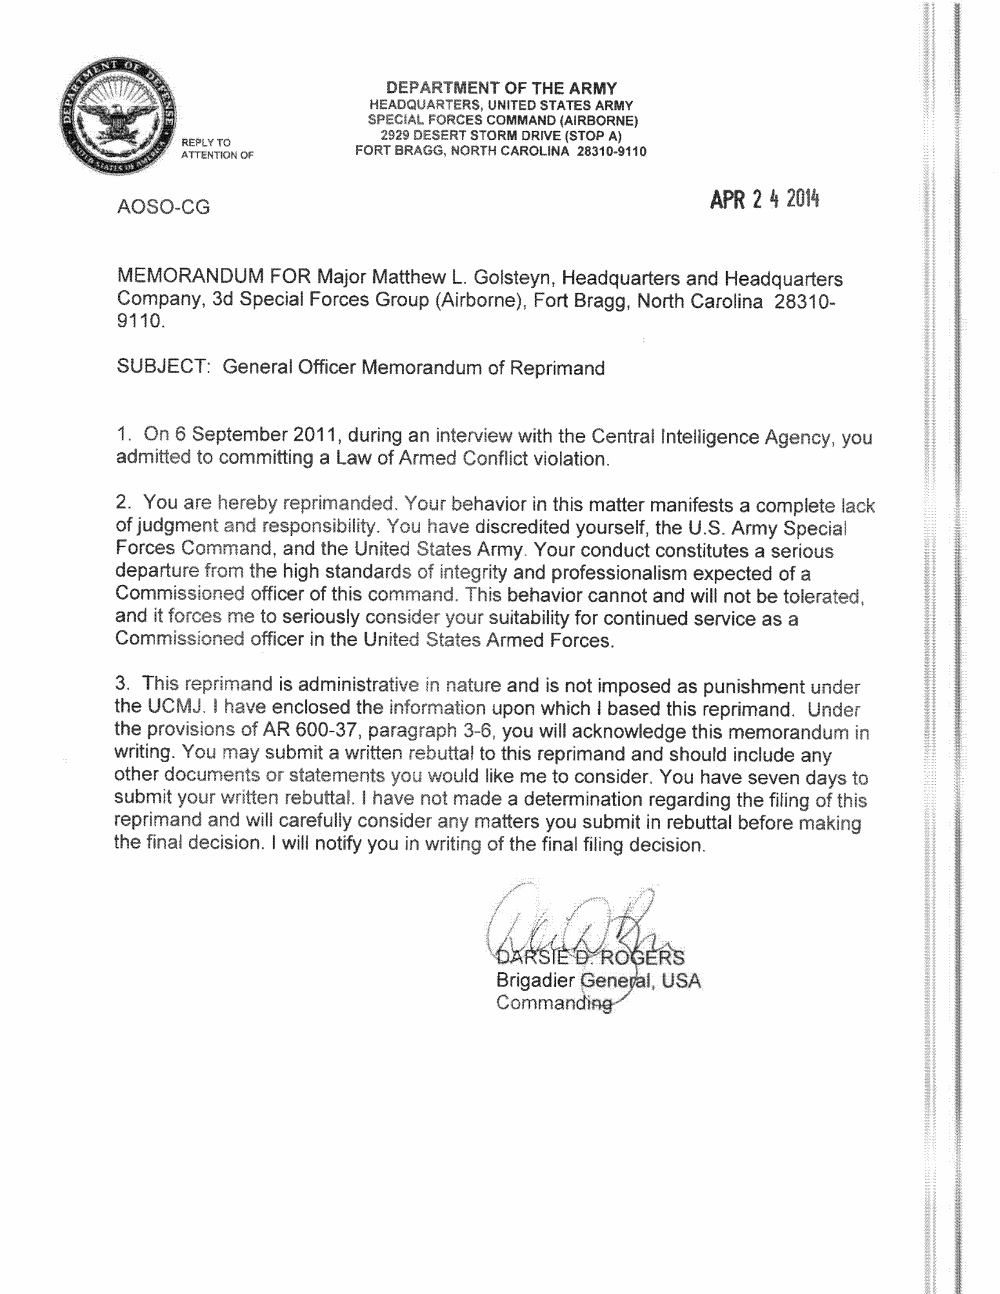 Page 5 from U.S. Army Documents on Major Mathew Golsteyn